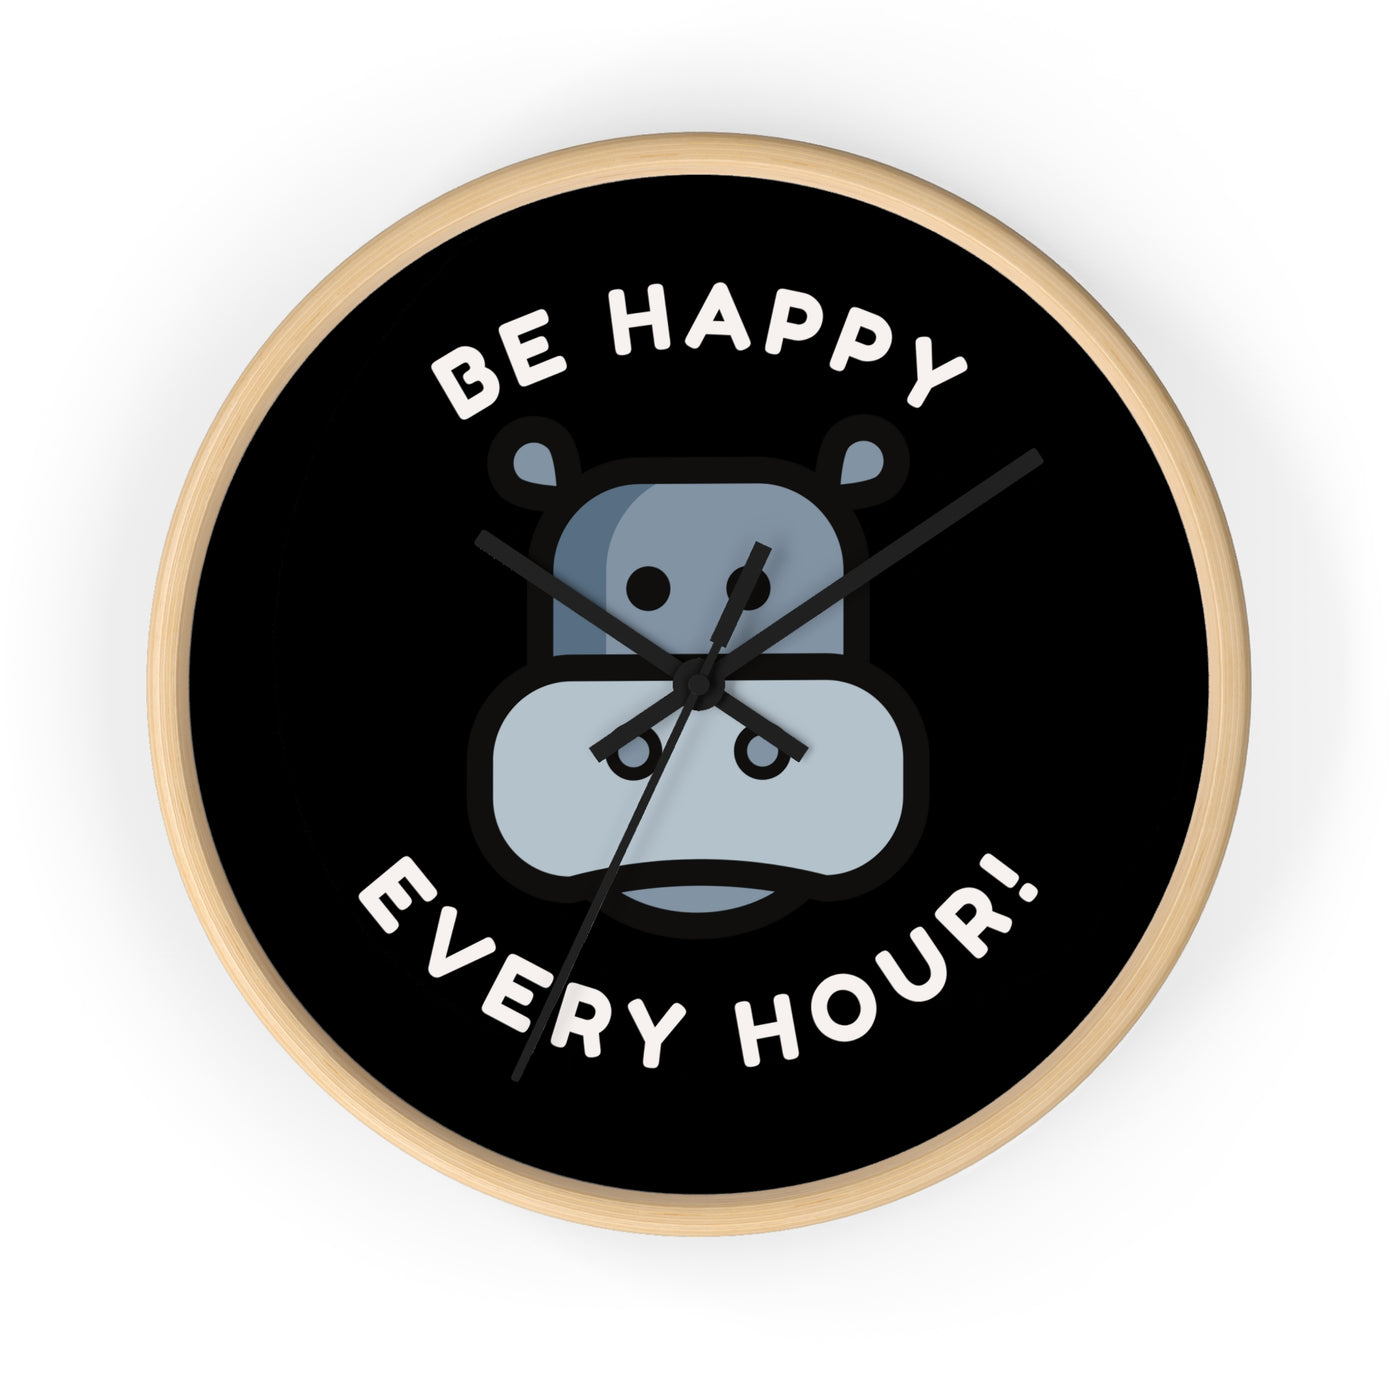 HIPPO HAPPINESS Wall Clock